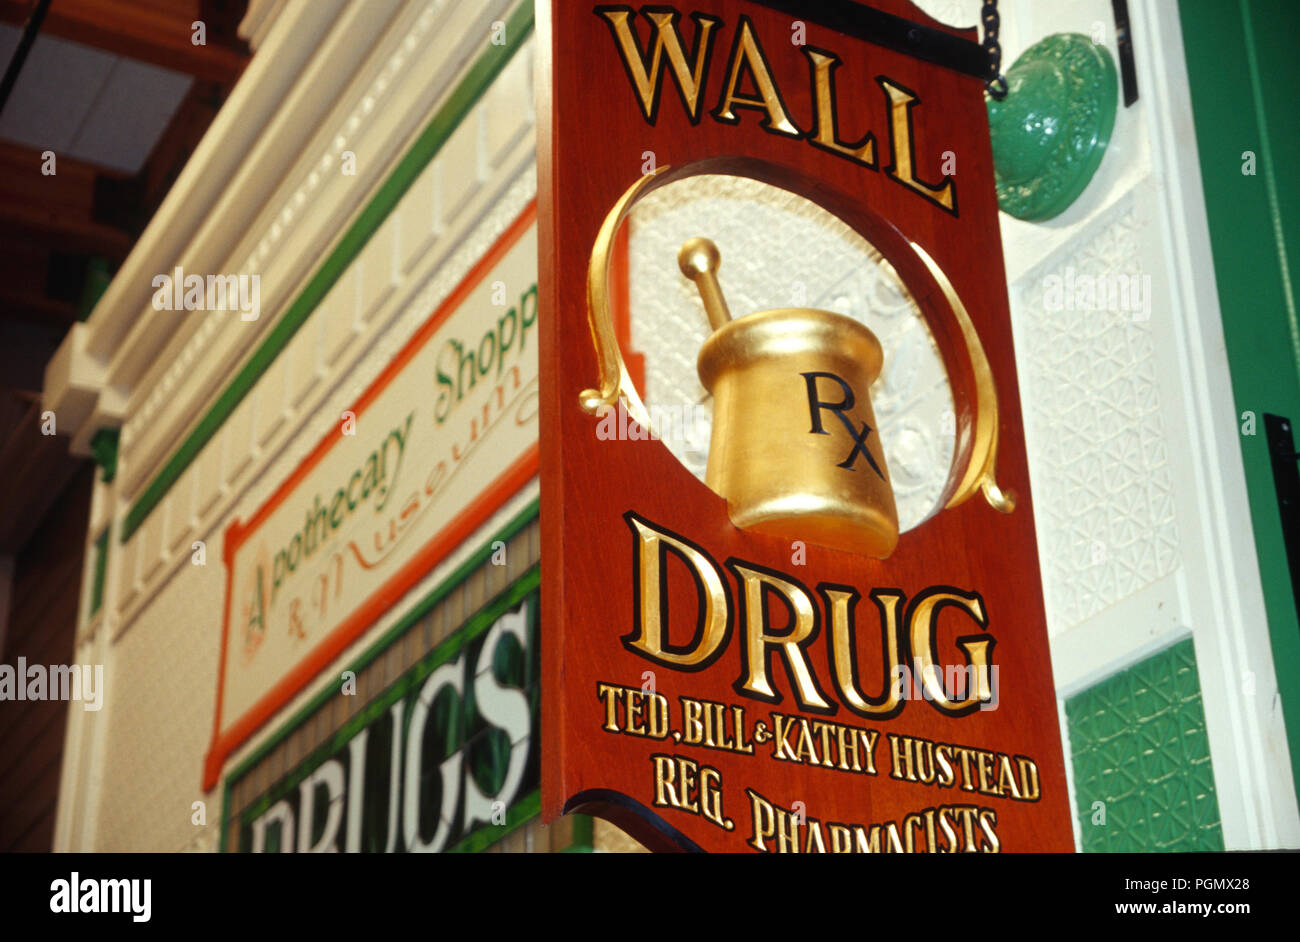 Wall Drug Store Apothecary Shoppe und Museum, Wand, South Dakota, USA Stockfoto